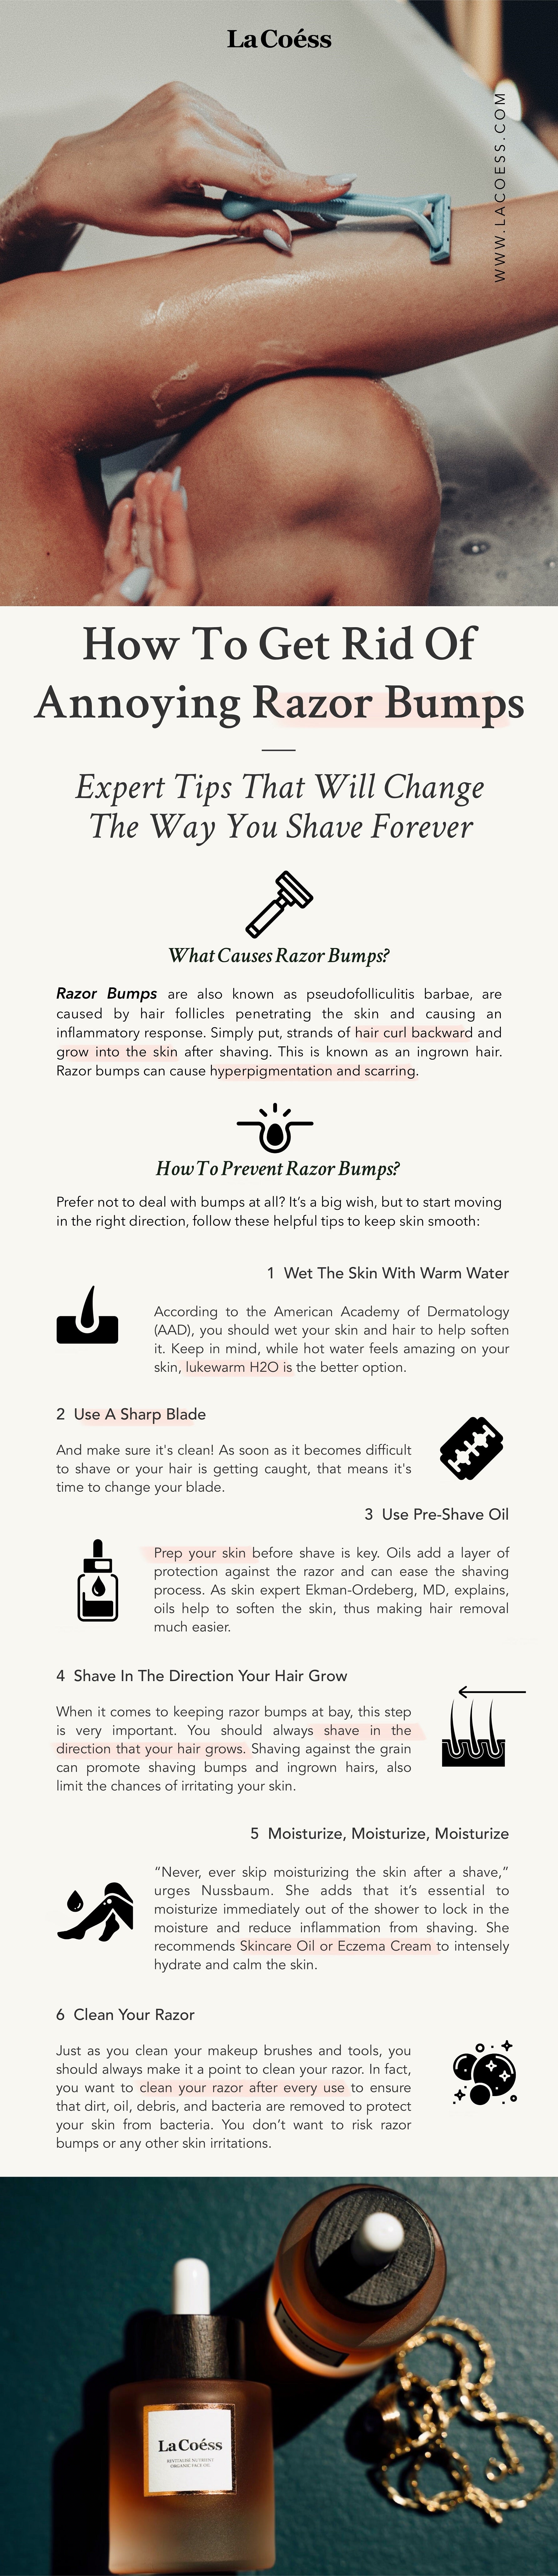 La Coess how to get rid of annoying razor bumps